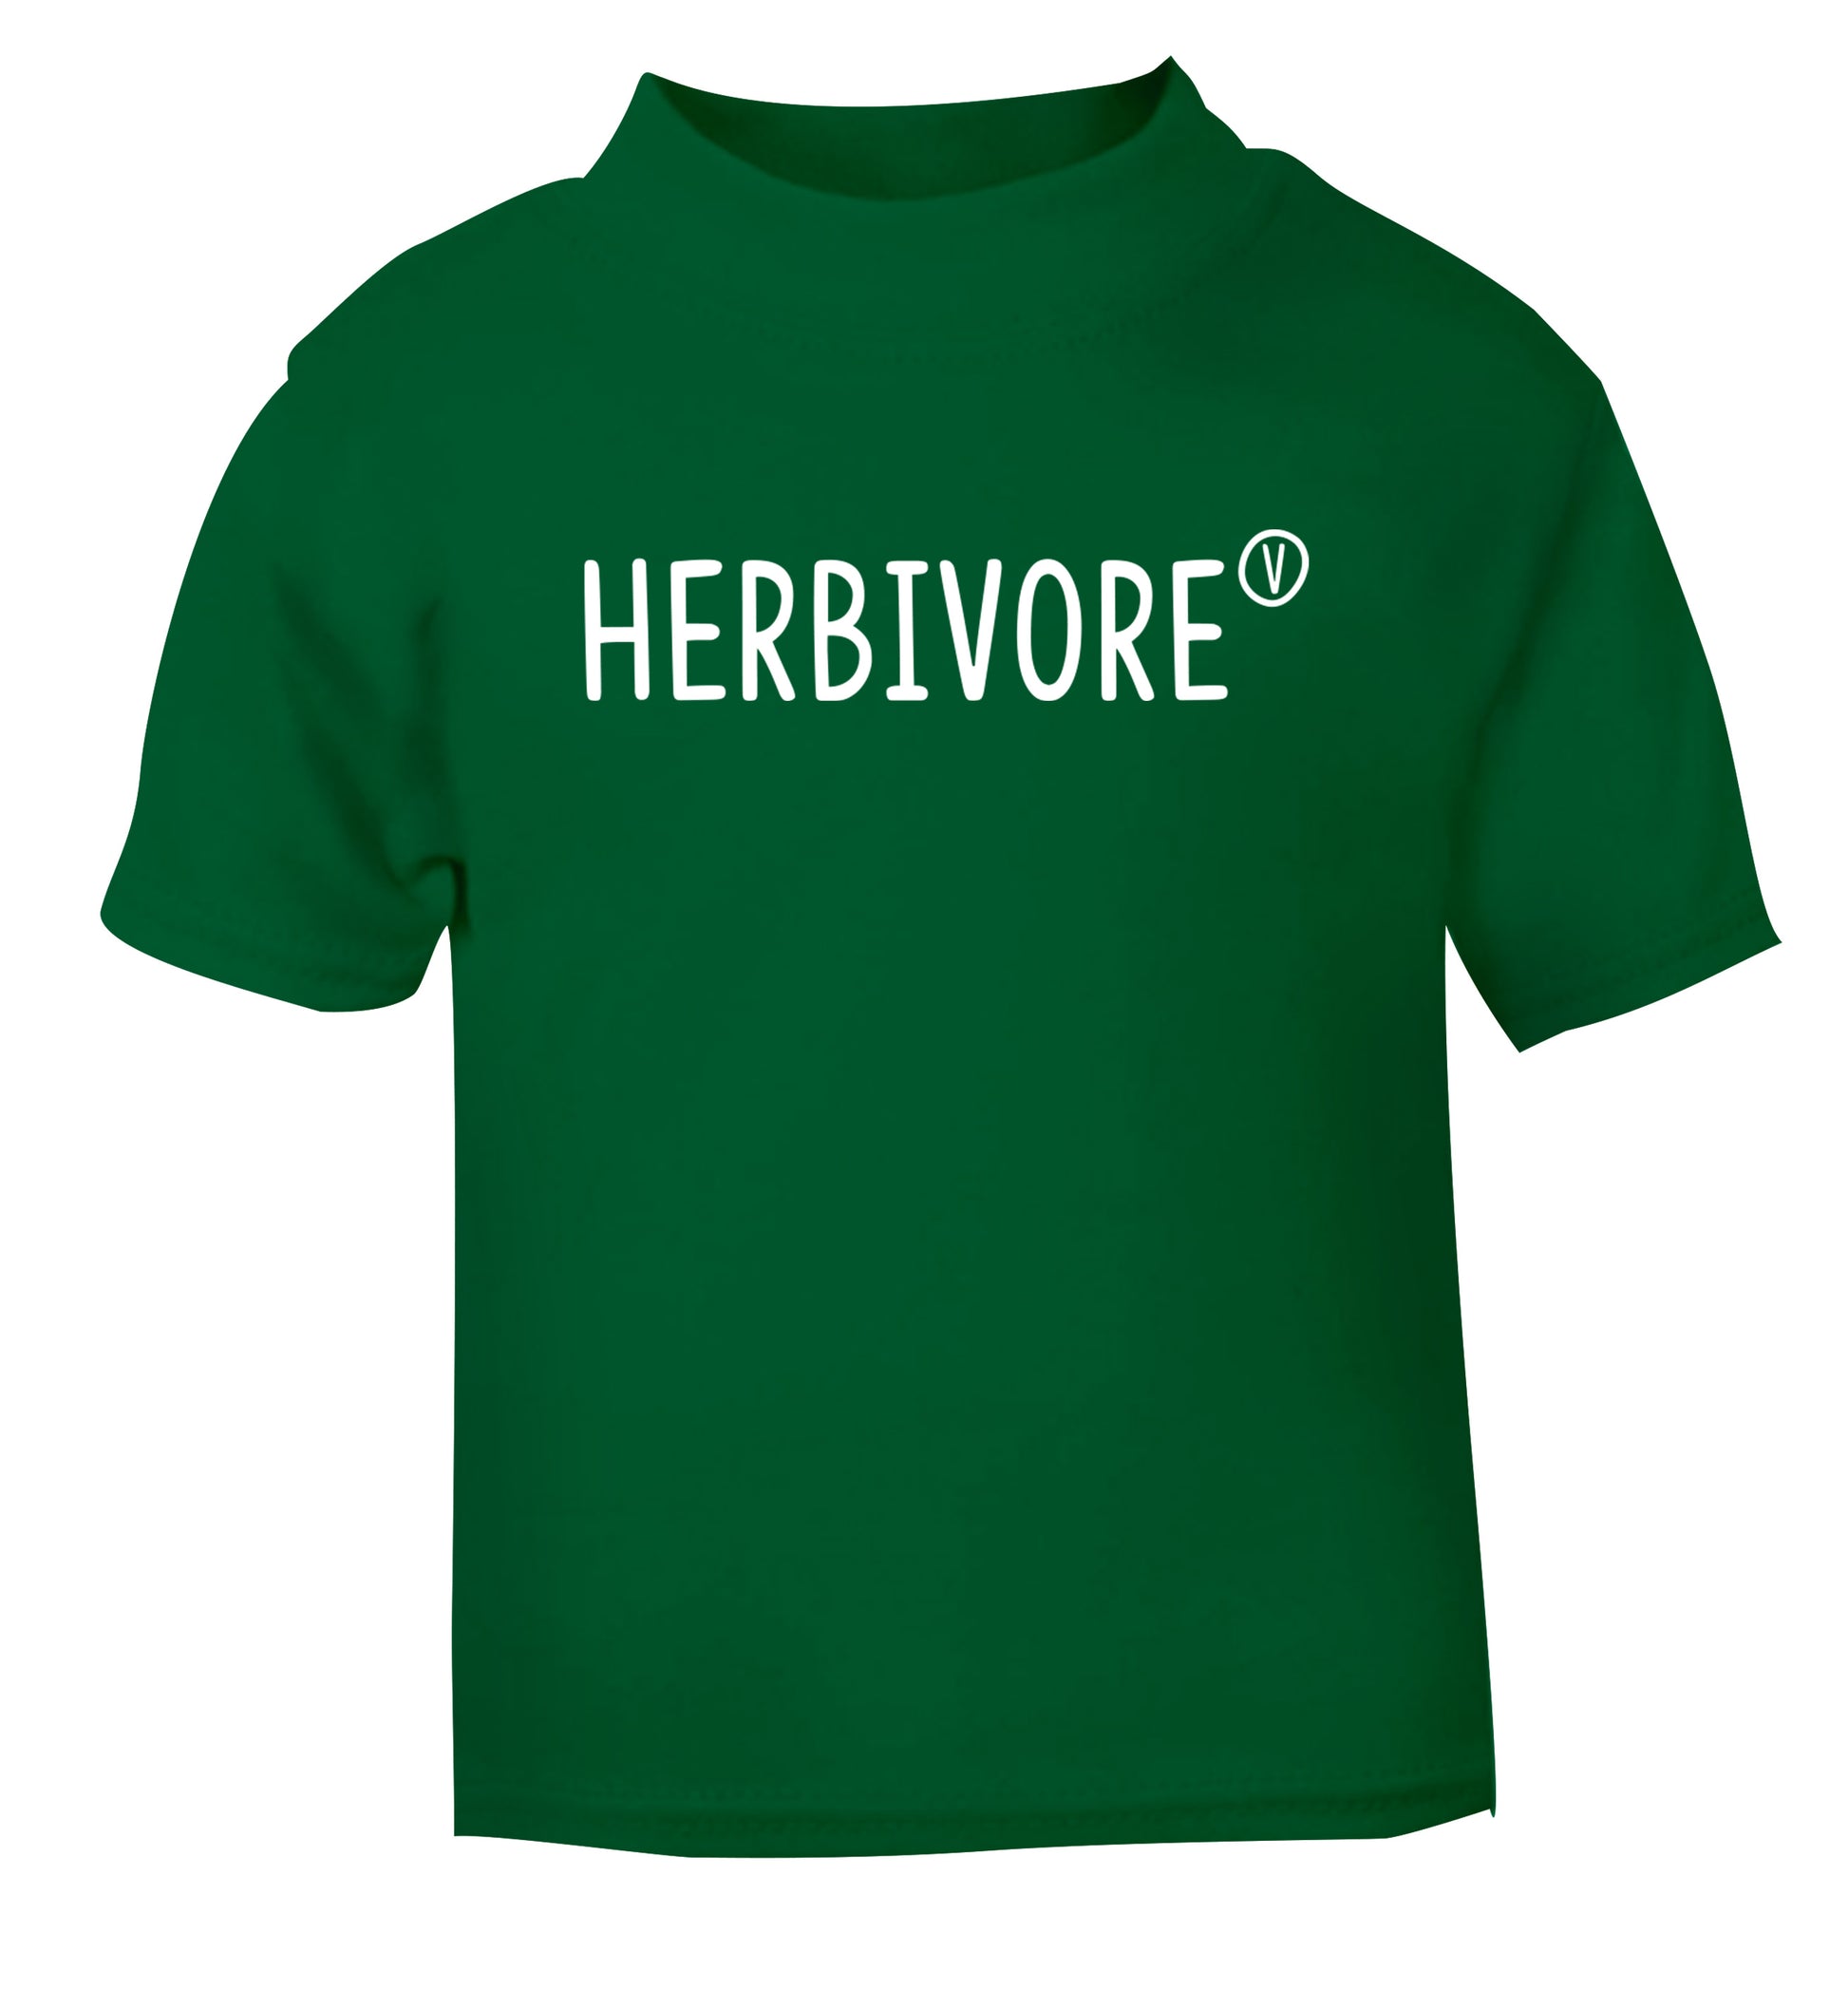 Herbivore green Baby Toddler Tshirt 2 Years